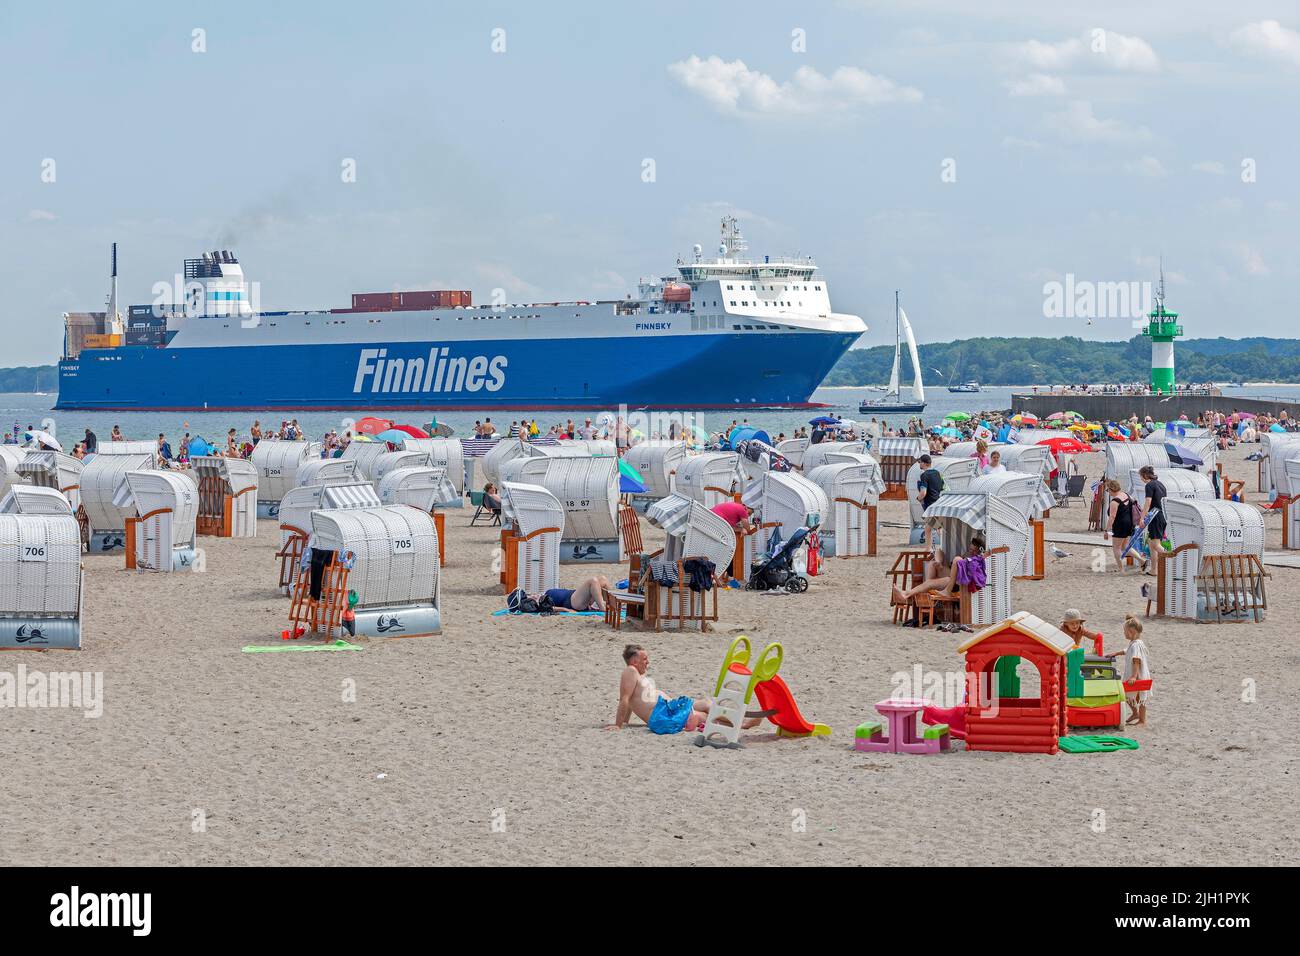 Sedie da spiaggia, Finnlines Ferry, faro, ingresso al porto, spiaggia, Travemünde, Lübeck, Schleswig-Holstein, Germania Foto Stock